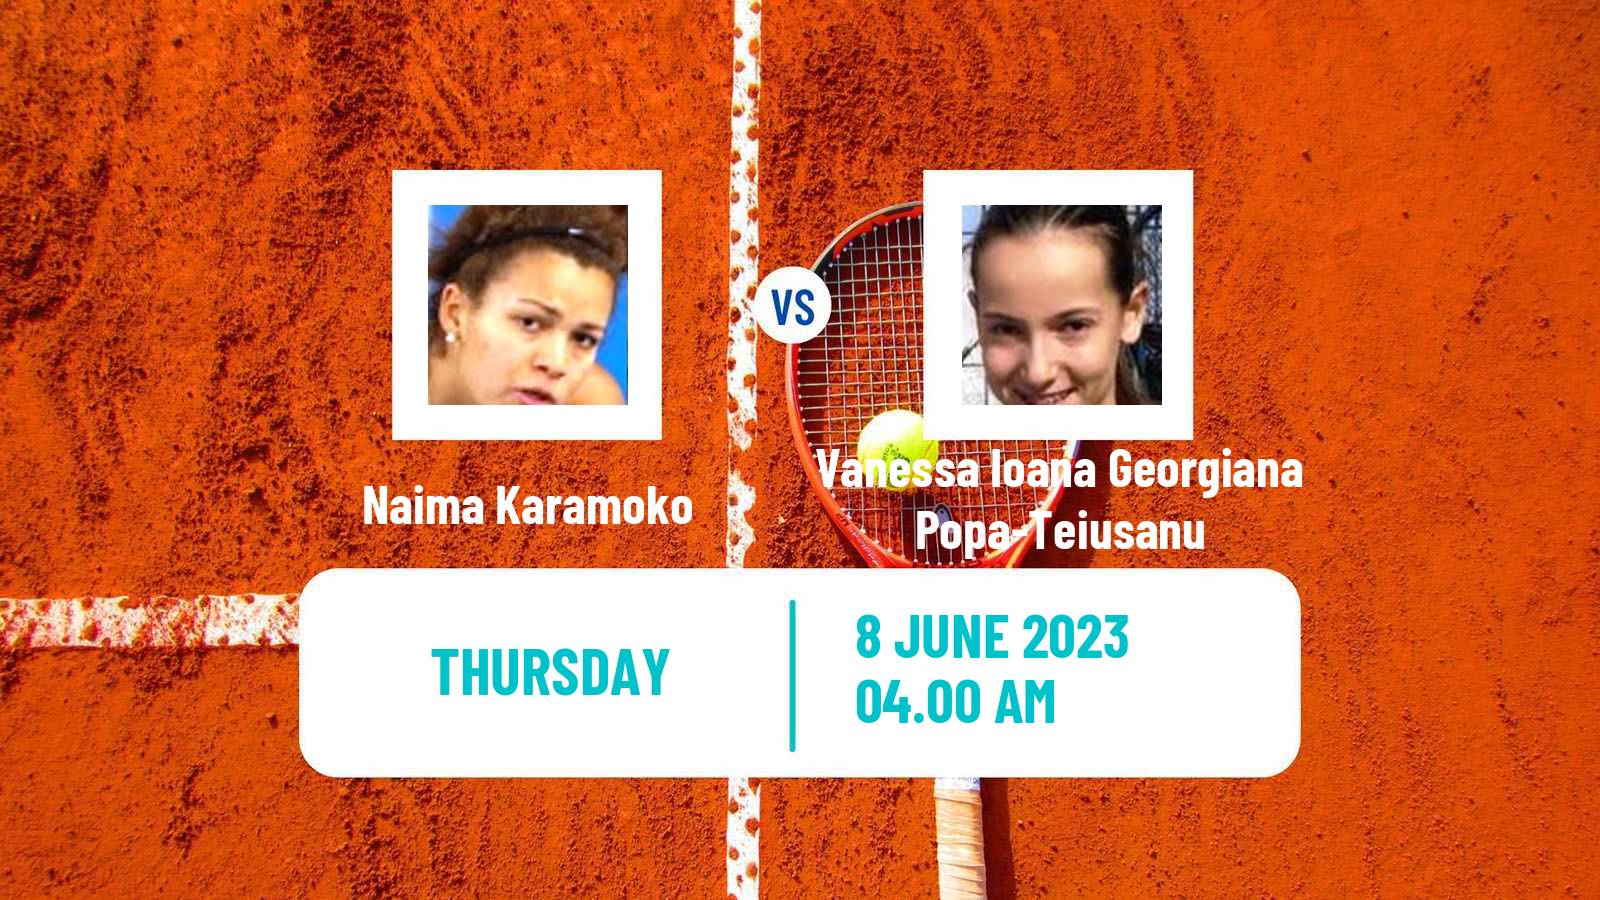 Tennis ITF W15 Monastir 18 Women Naima Karamoko - Vanessa Ioana Georgiana Popa-Teiusanu